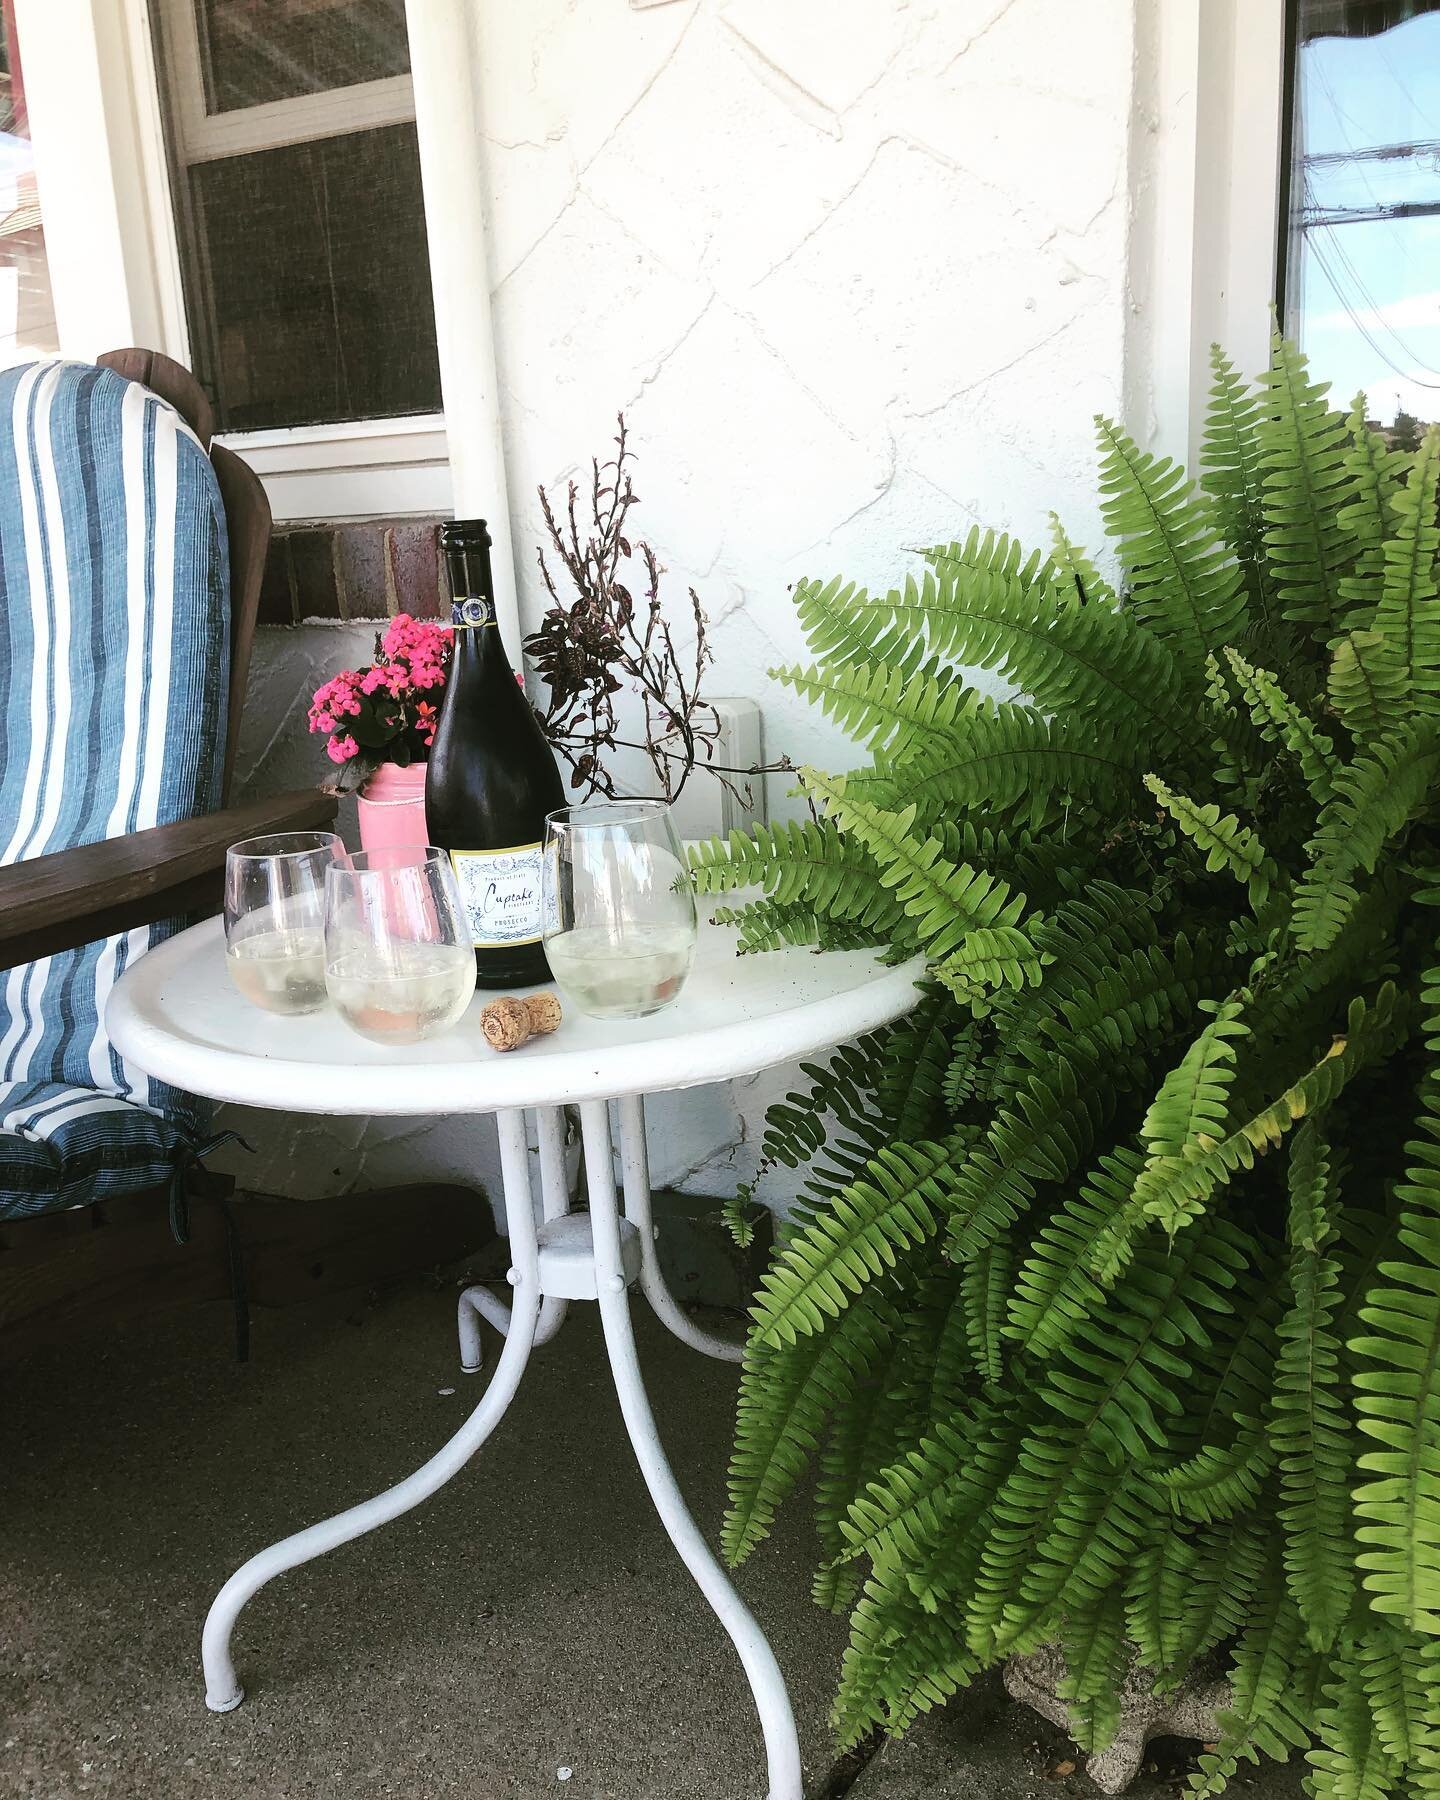 Summer is for Prosecco on the porch. #porchlife #bestofocnj #islandlife #zennethmanorinn #cocktails #airbnbsuperhost #ocnj #ourbeachhouseisyourbeachhouse #boutiquehotel